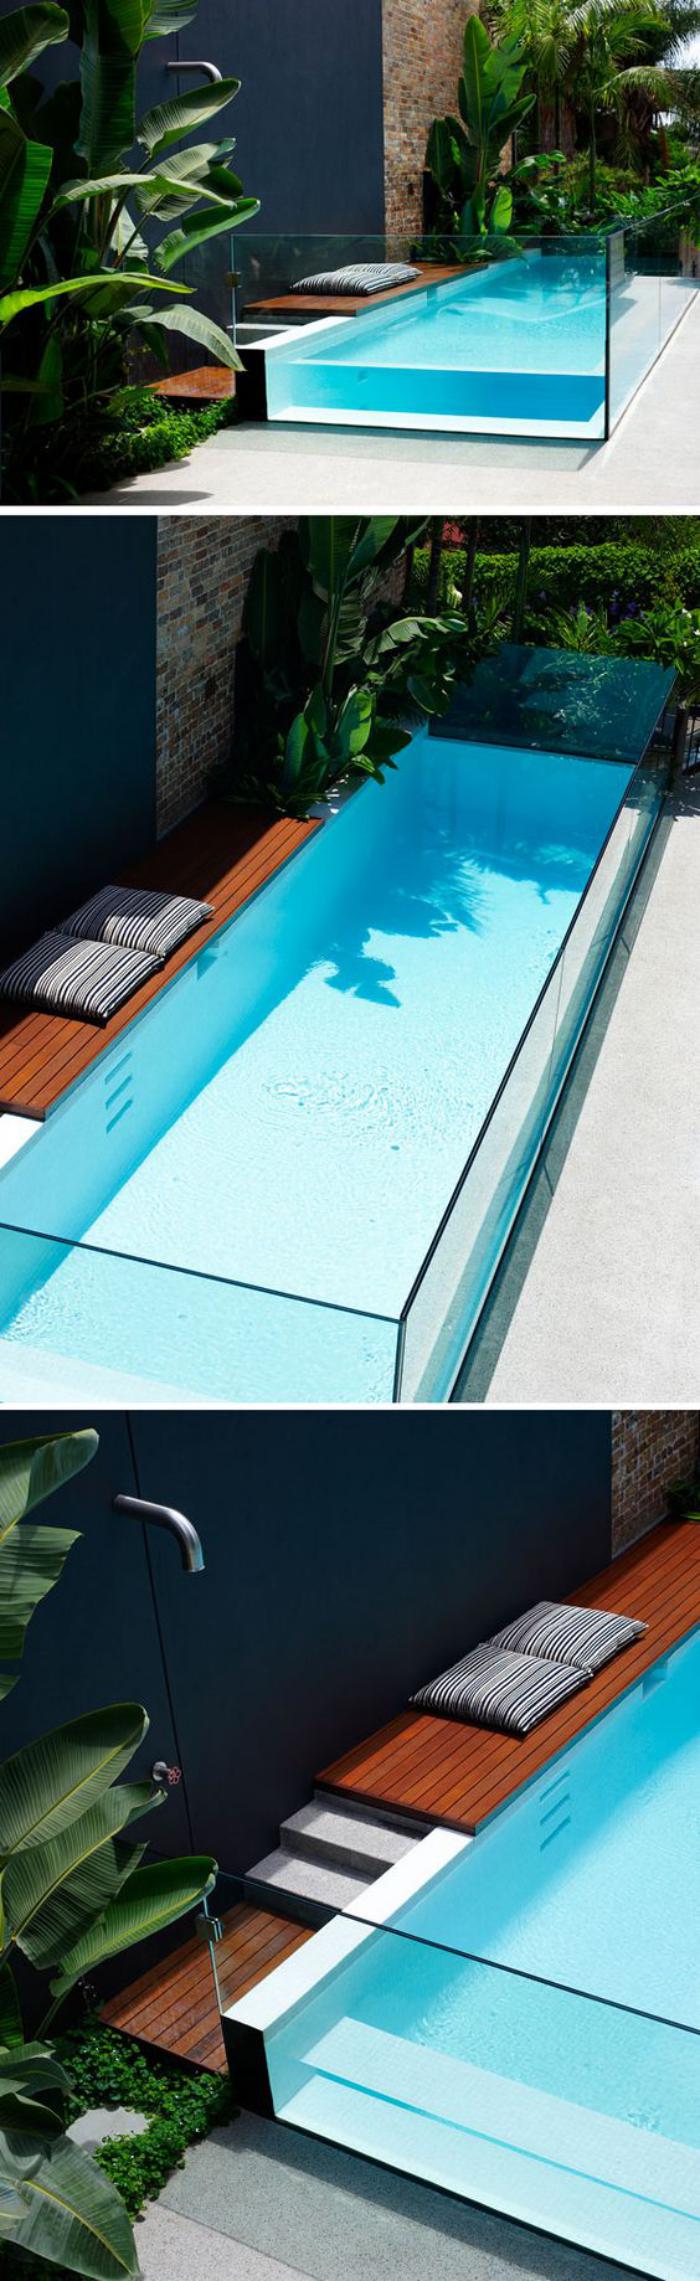 piscine-en-verre-design-parfait-piscine-parois-de-verre